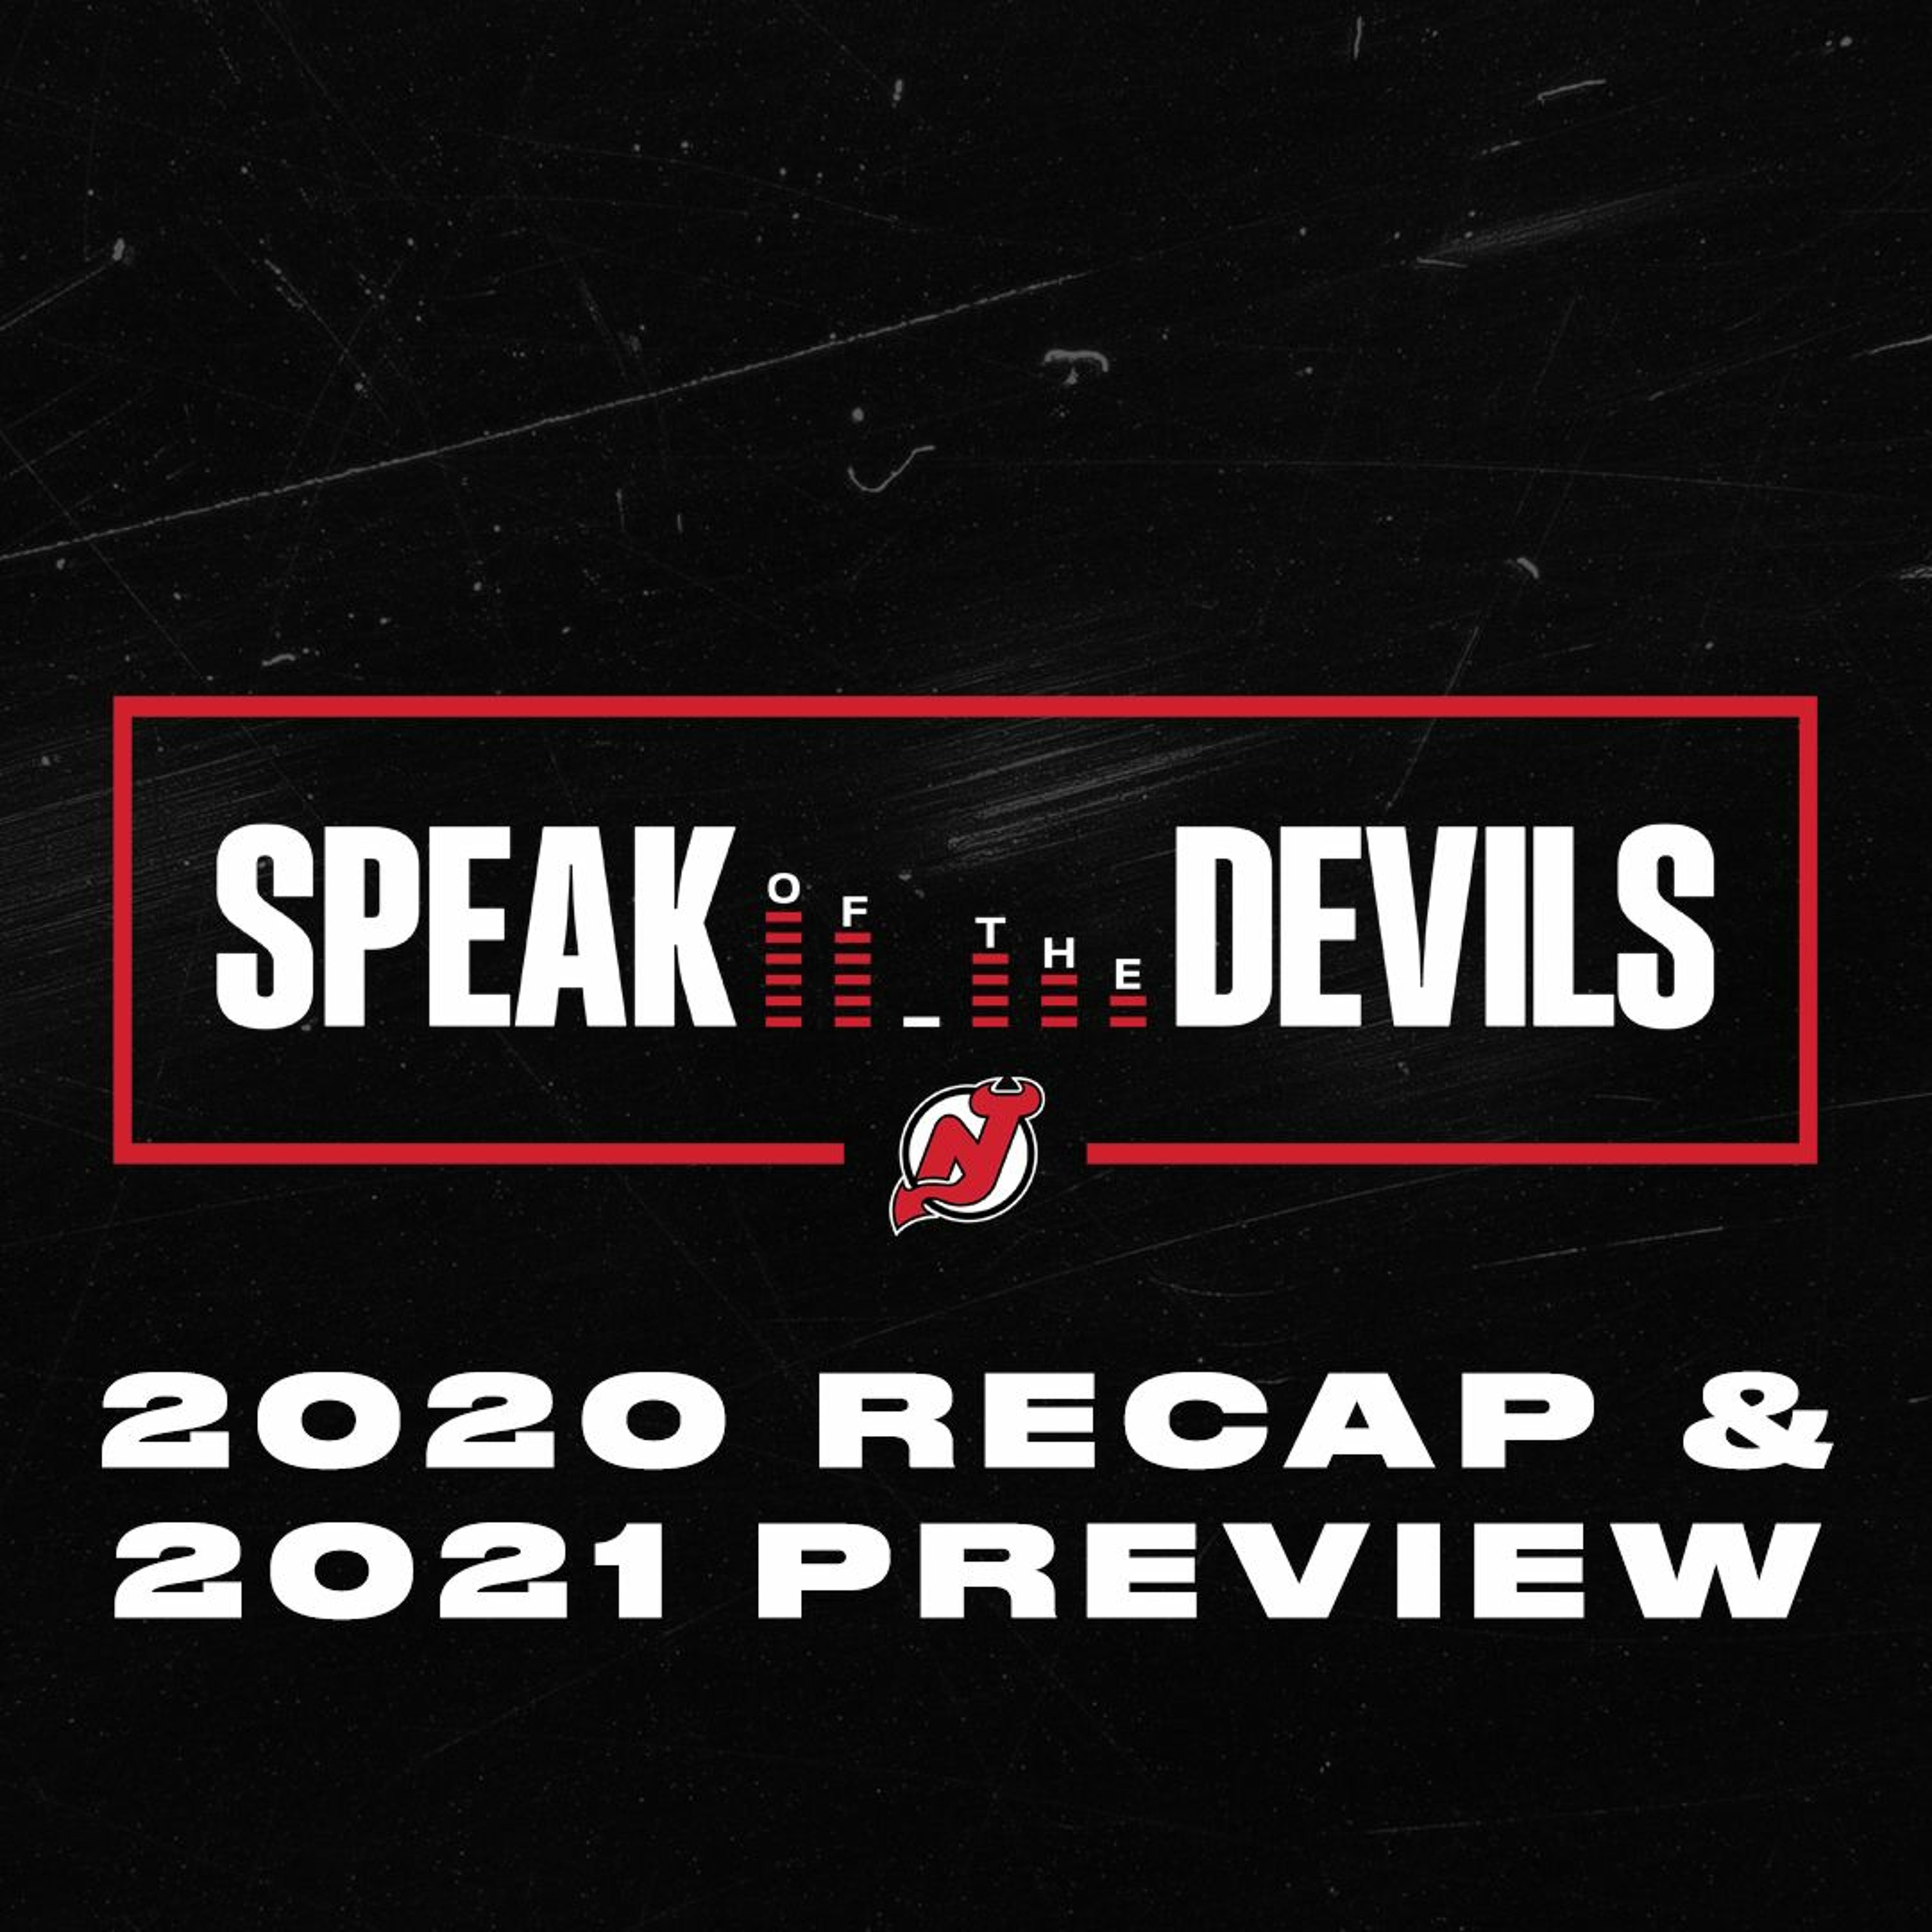 2020 Recap & 2021 Preview | Speak of the Devils